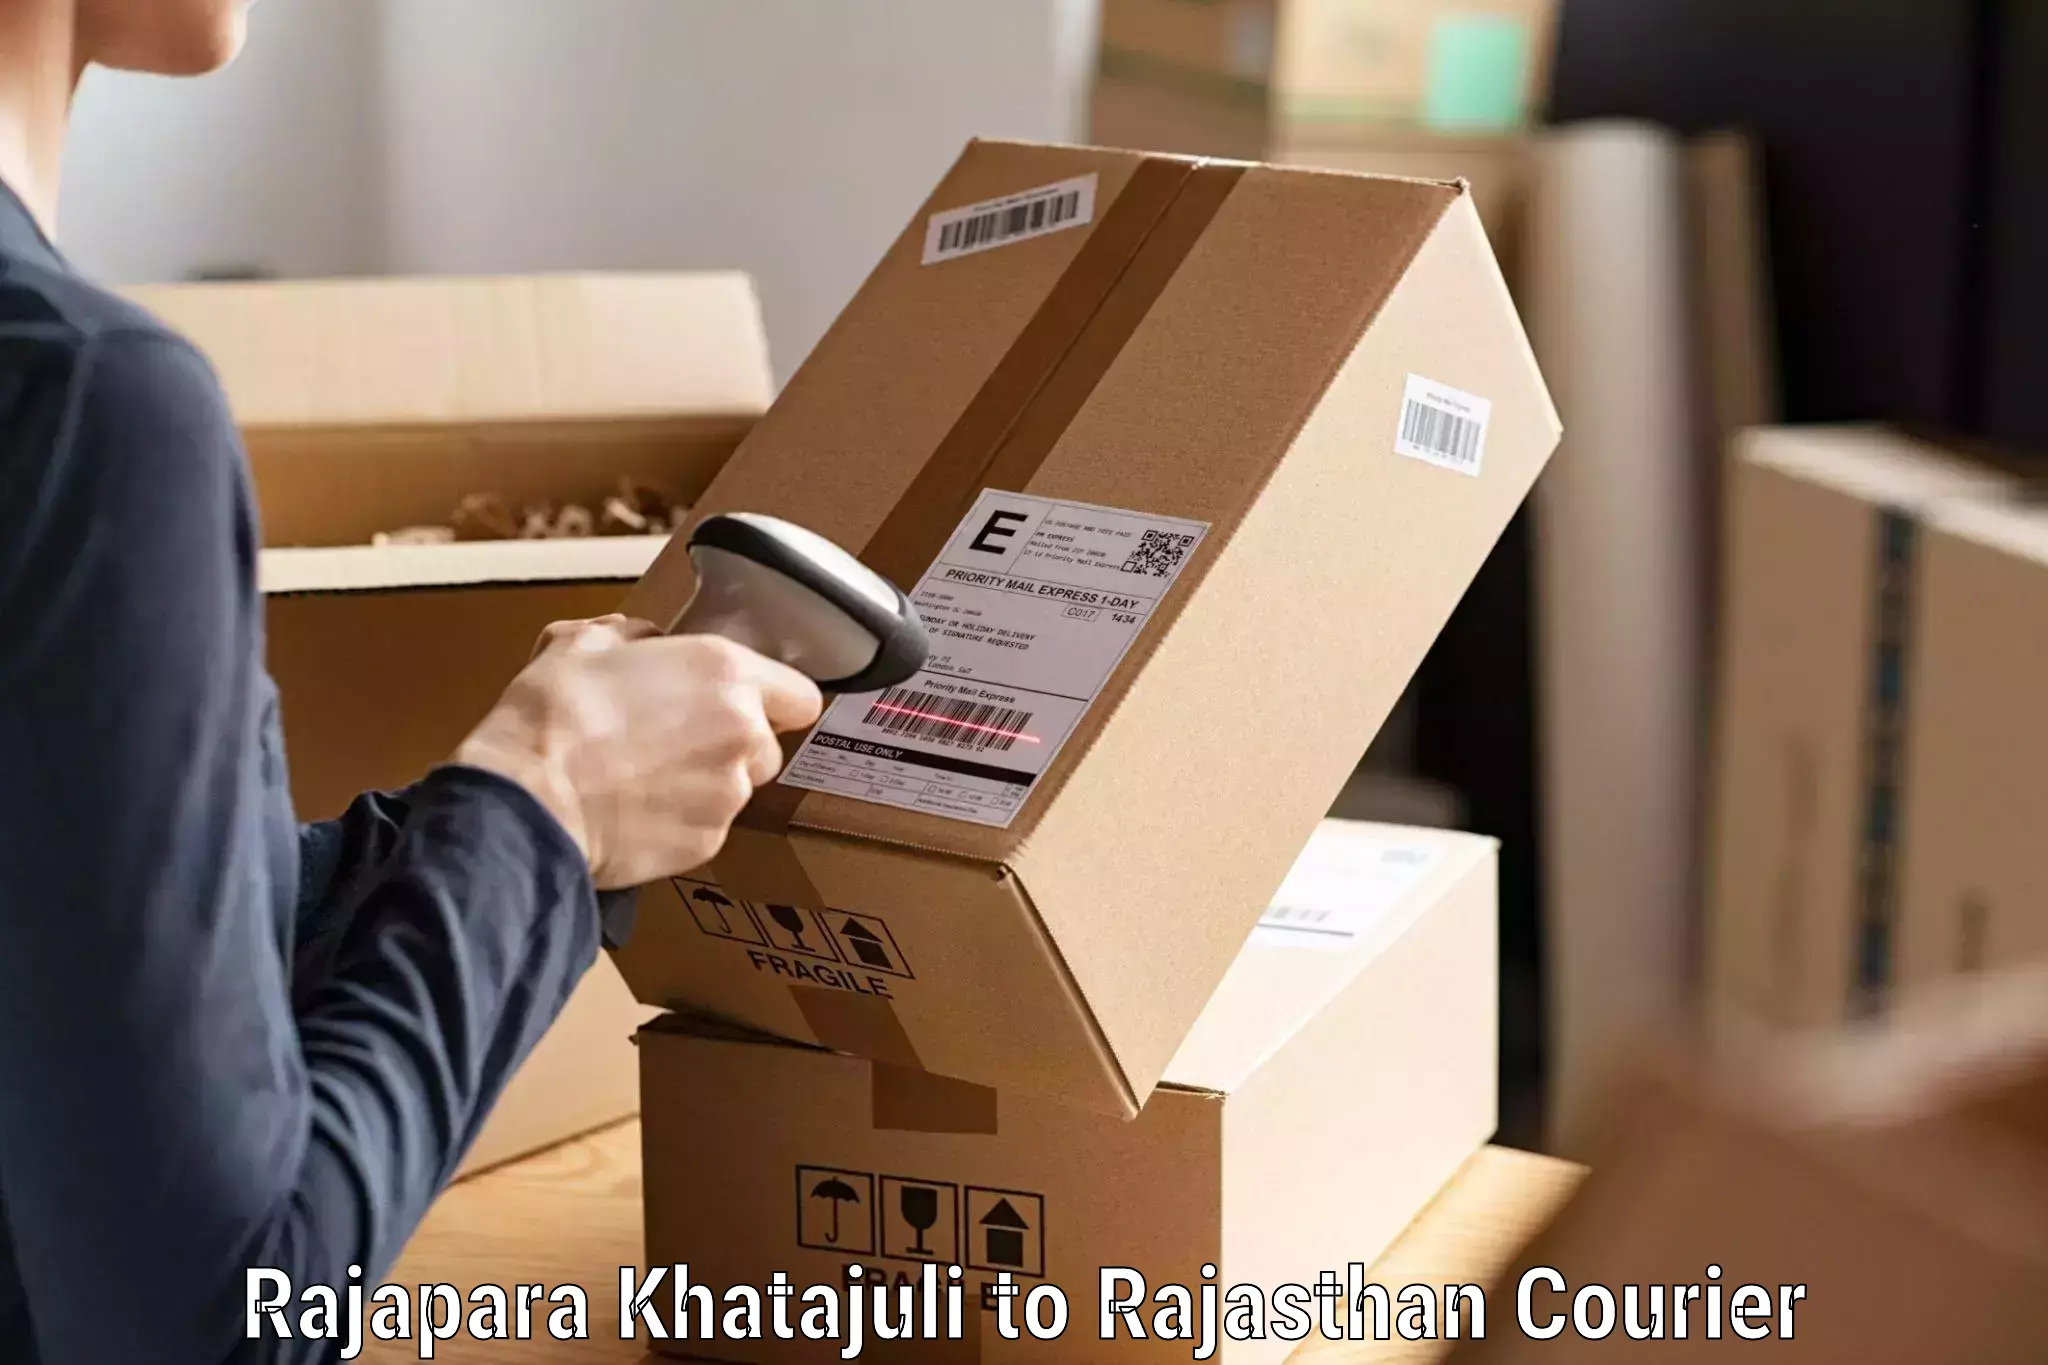 Express mail solutions Rajapara Khatajuli to Jaisalmer